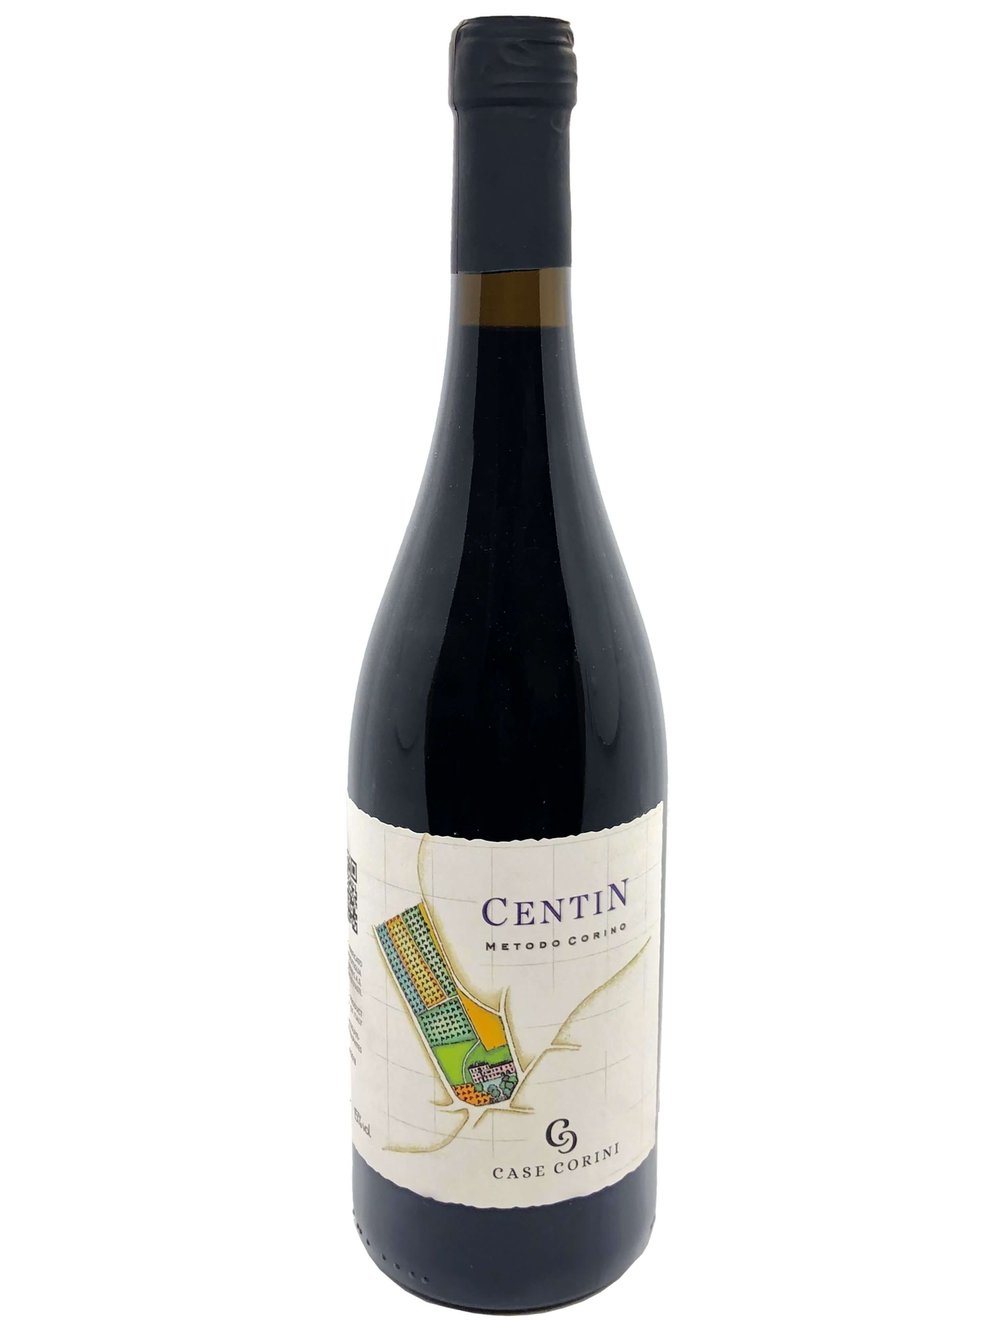 Lorenzo Corino | Case Corini Centin Nebbiolo Natural Wine | Organic Biodynamic